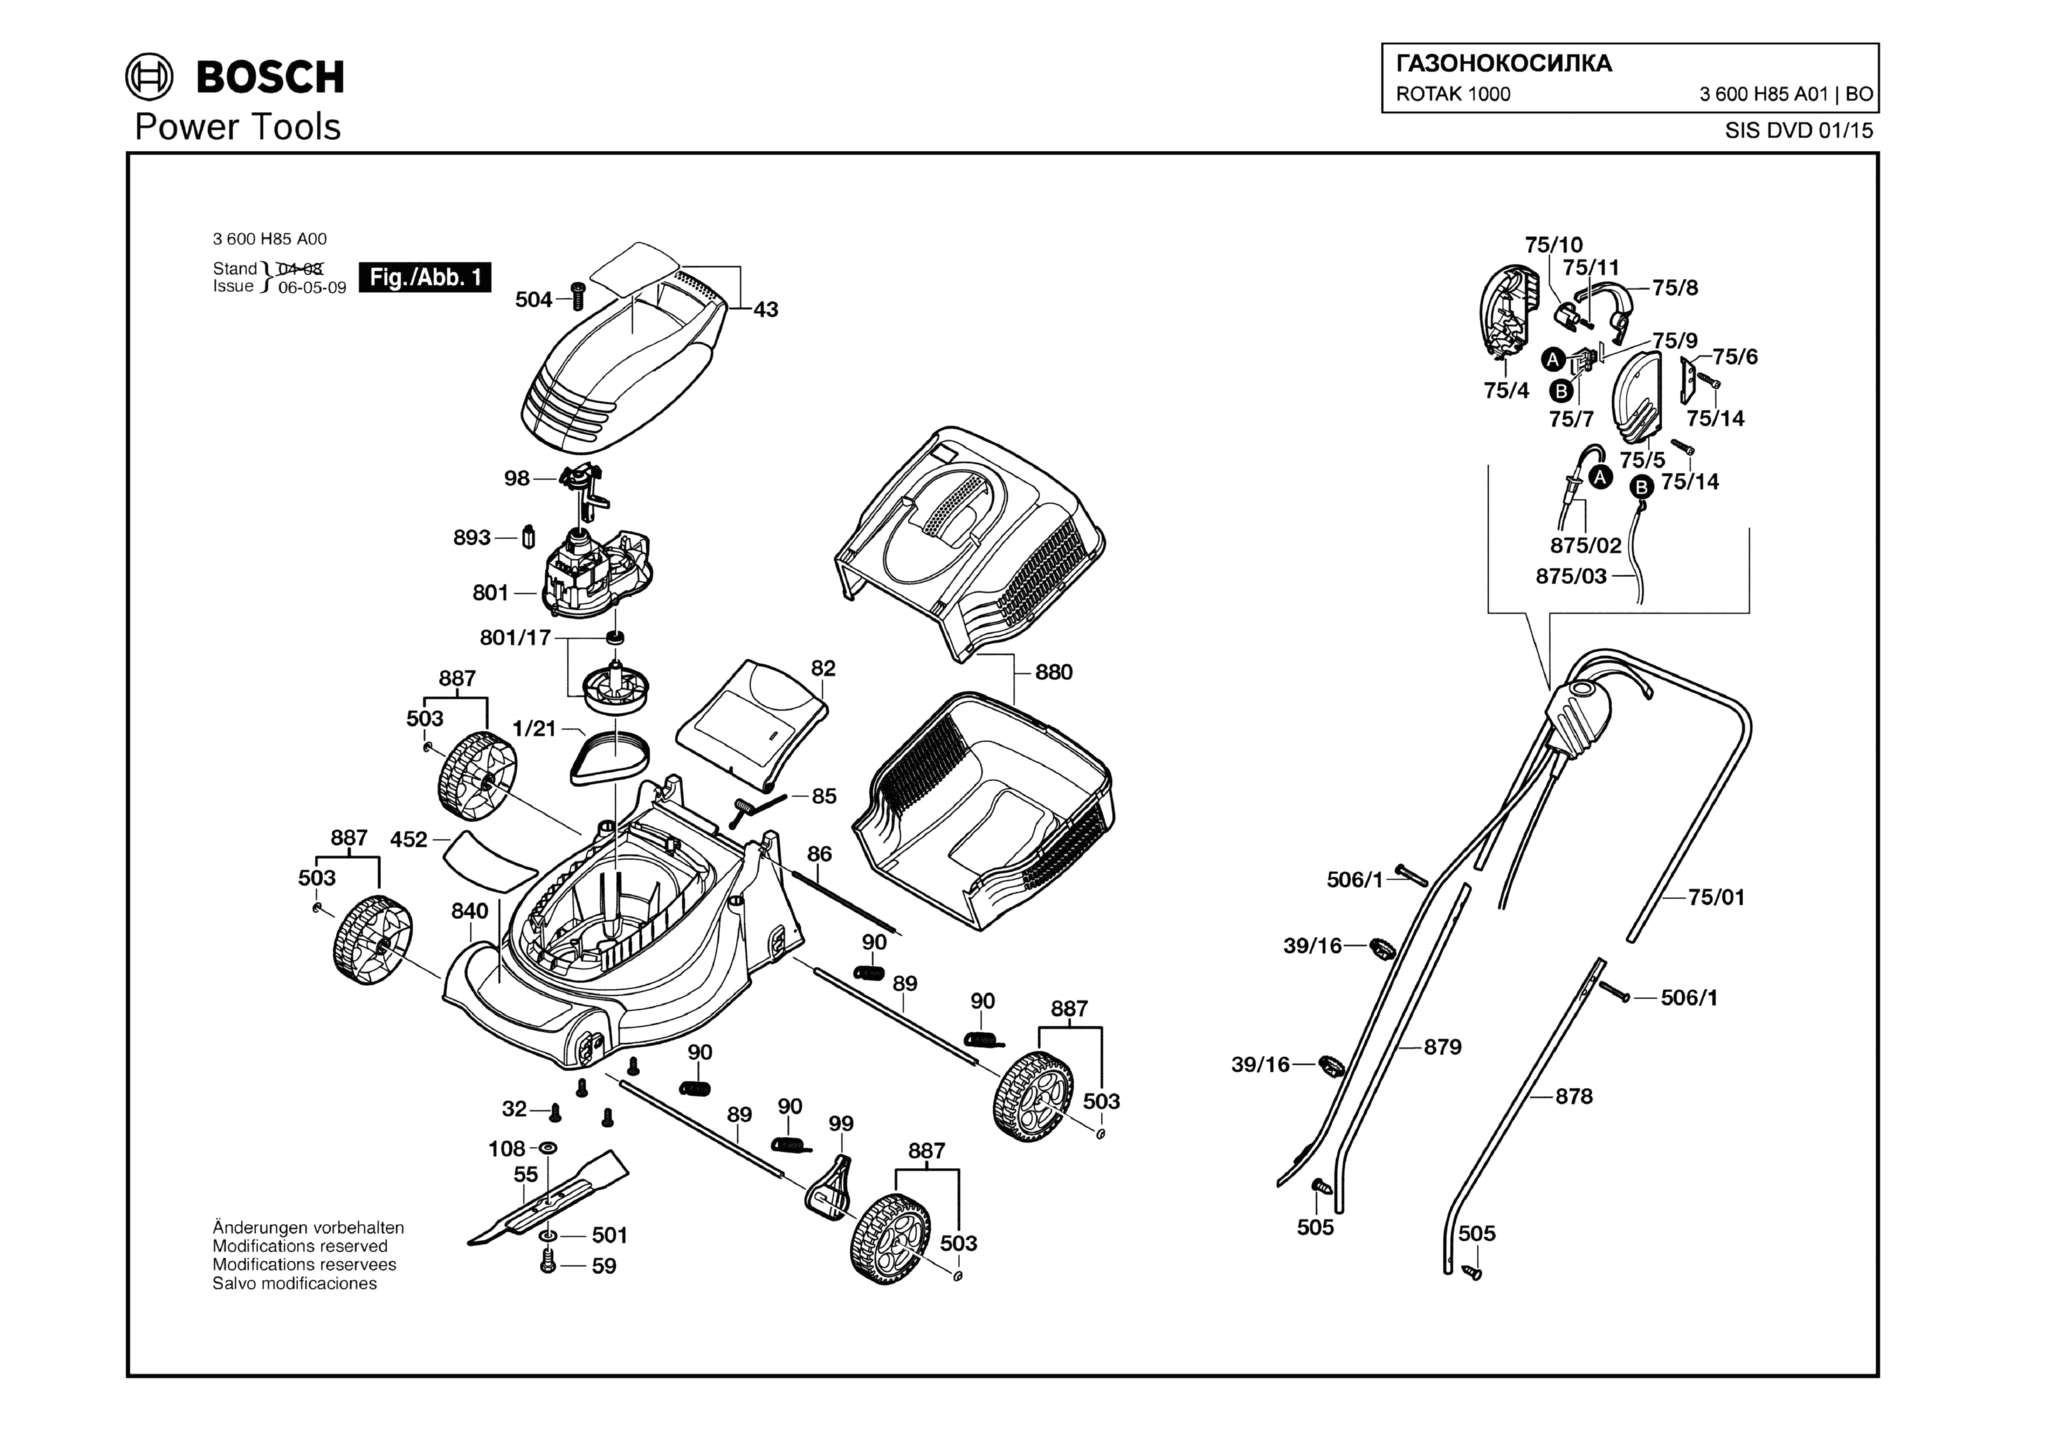 Запчасти, схема и деталировка Bosch ROTAK 1000 (ТИП 3600H85A01)